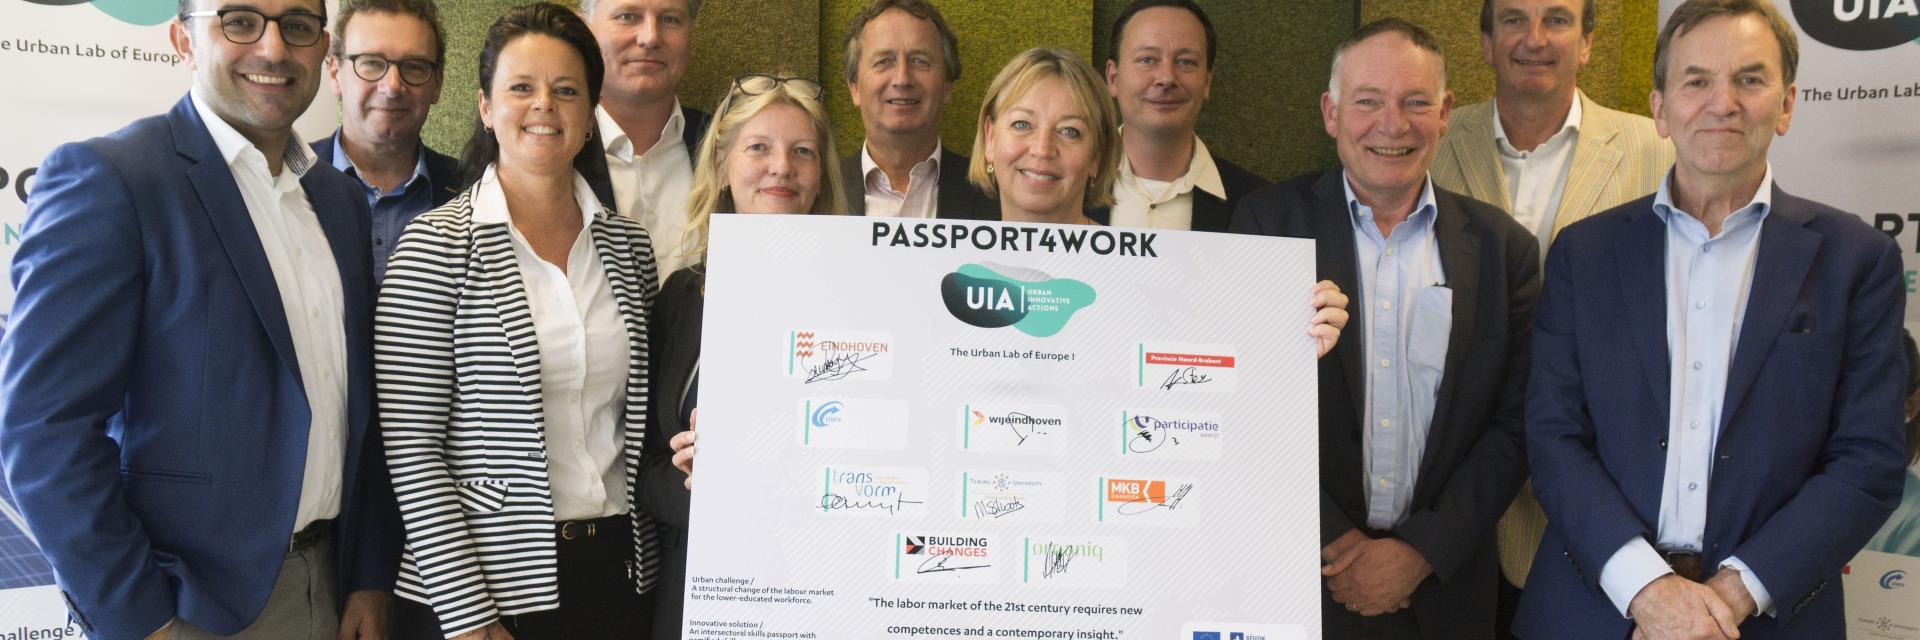 Samenwerkingsproject Passport4work